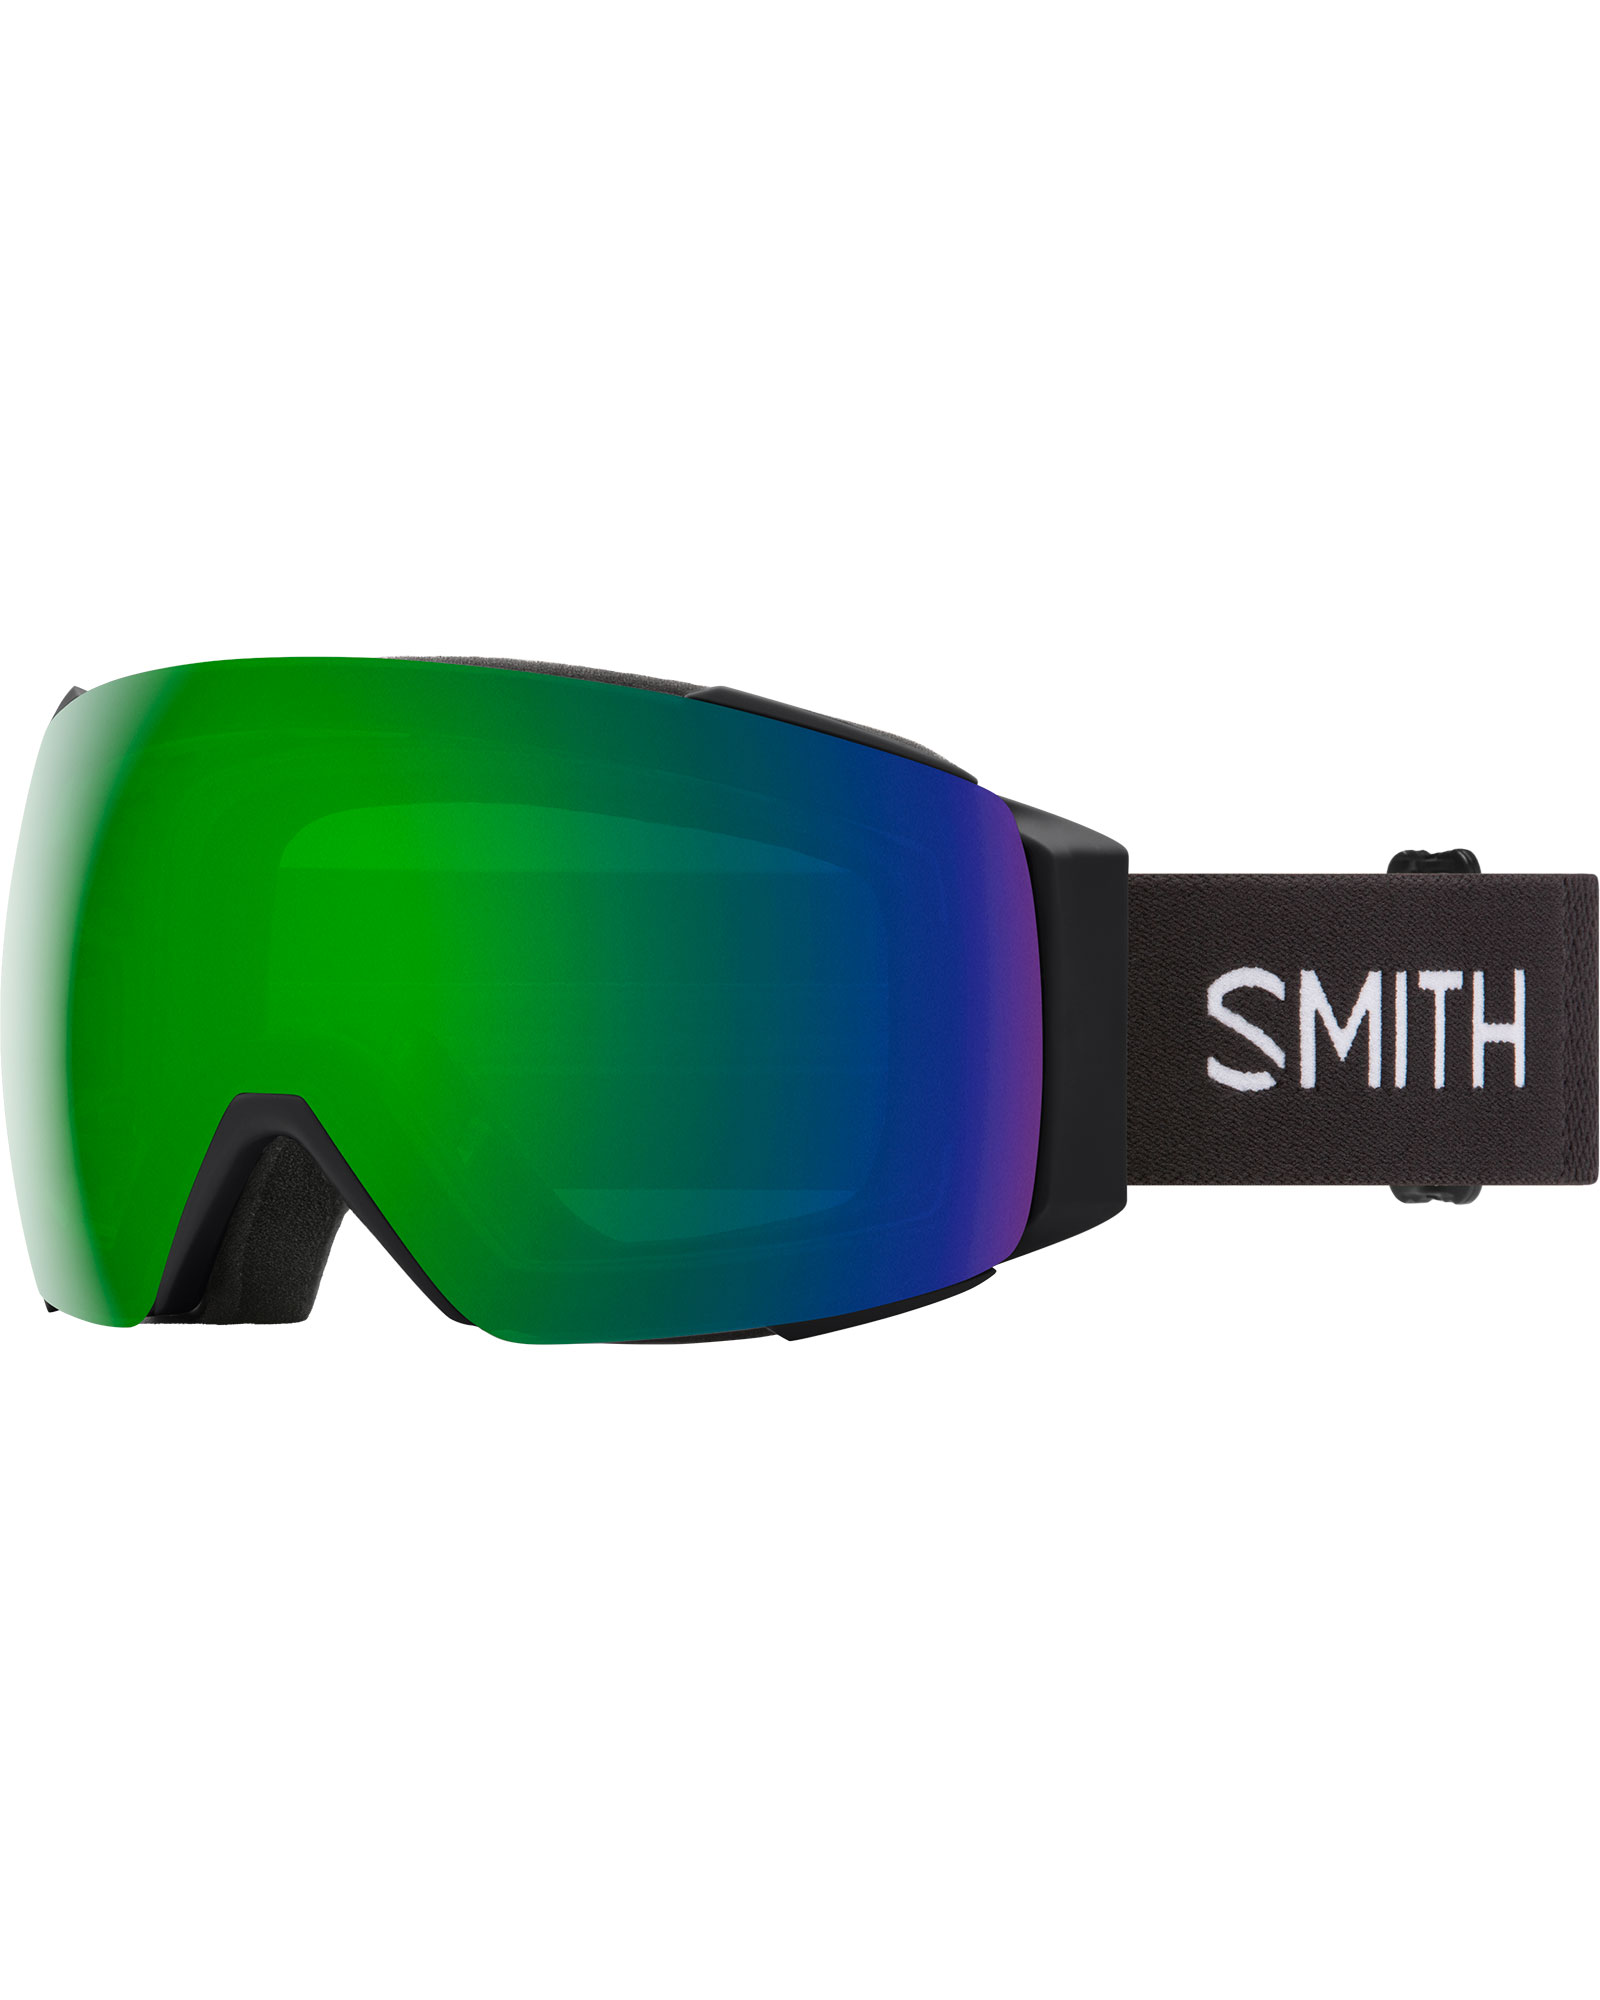 Smith I/O MAG Black / ChromaPop Sun Green Mirror + ChromaPop Storm Rose Flash Goggles - black